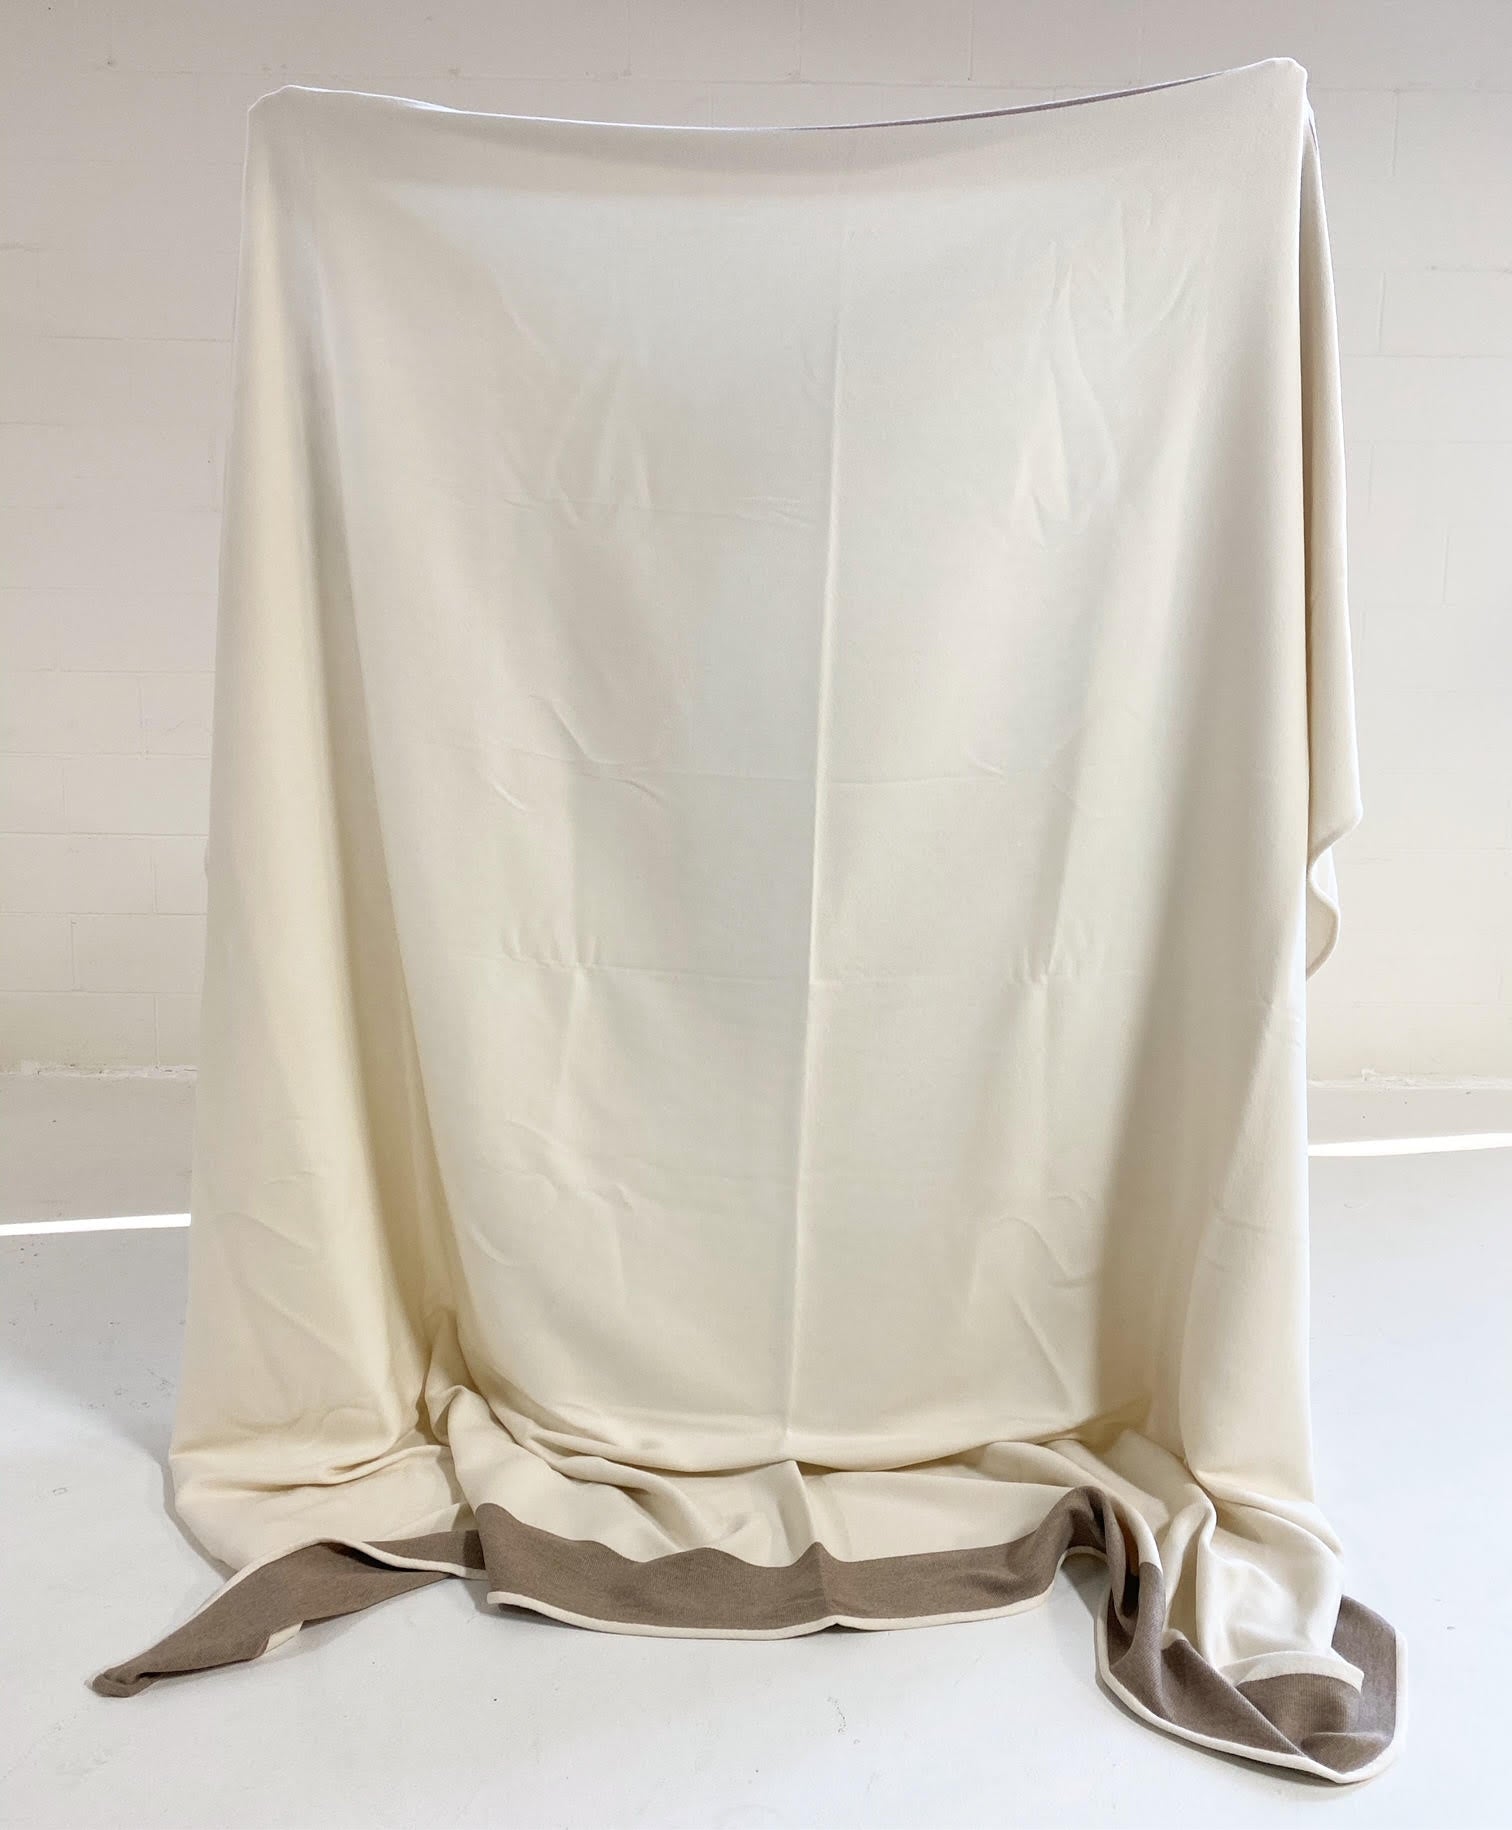 Large Bed Blanket, Biancore